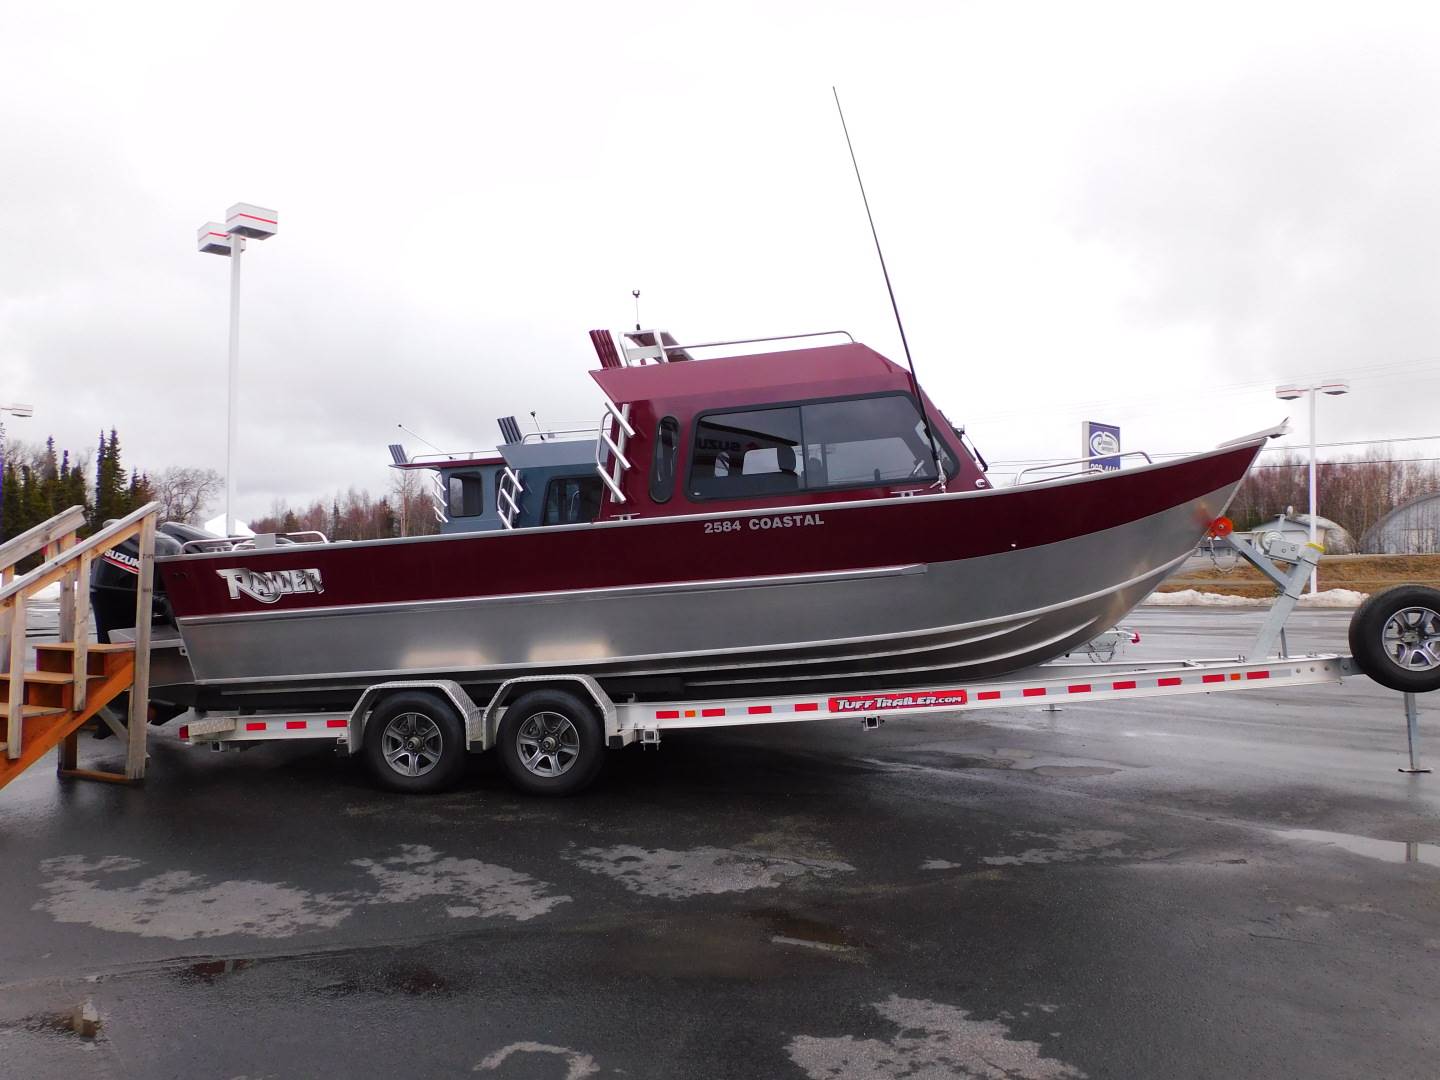 2021 Raider Boats 2584 Coastal  "SOLD" in Soldotna, Alaska - Photo 2